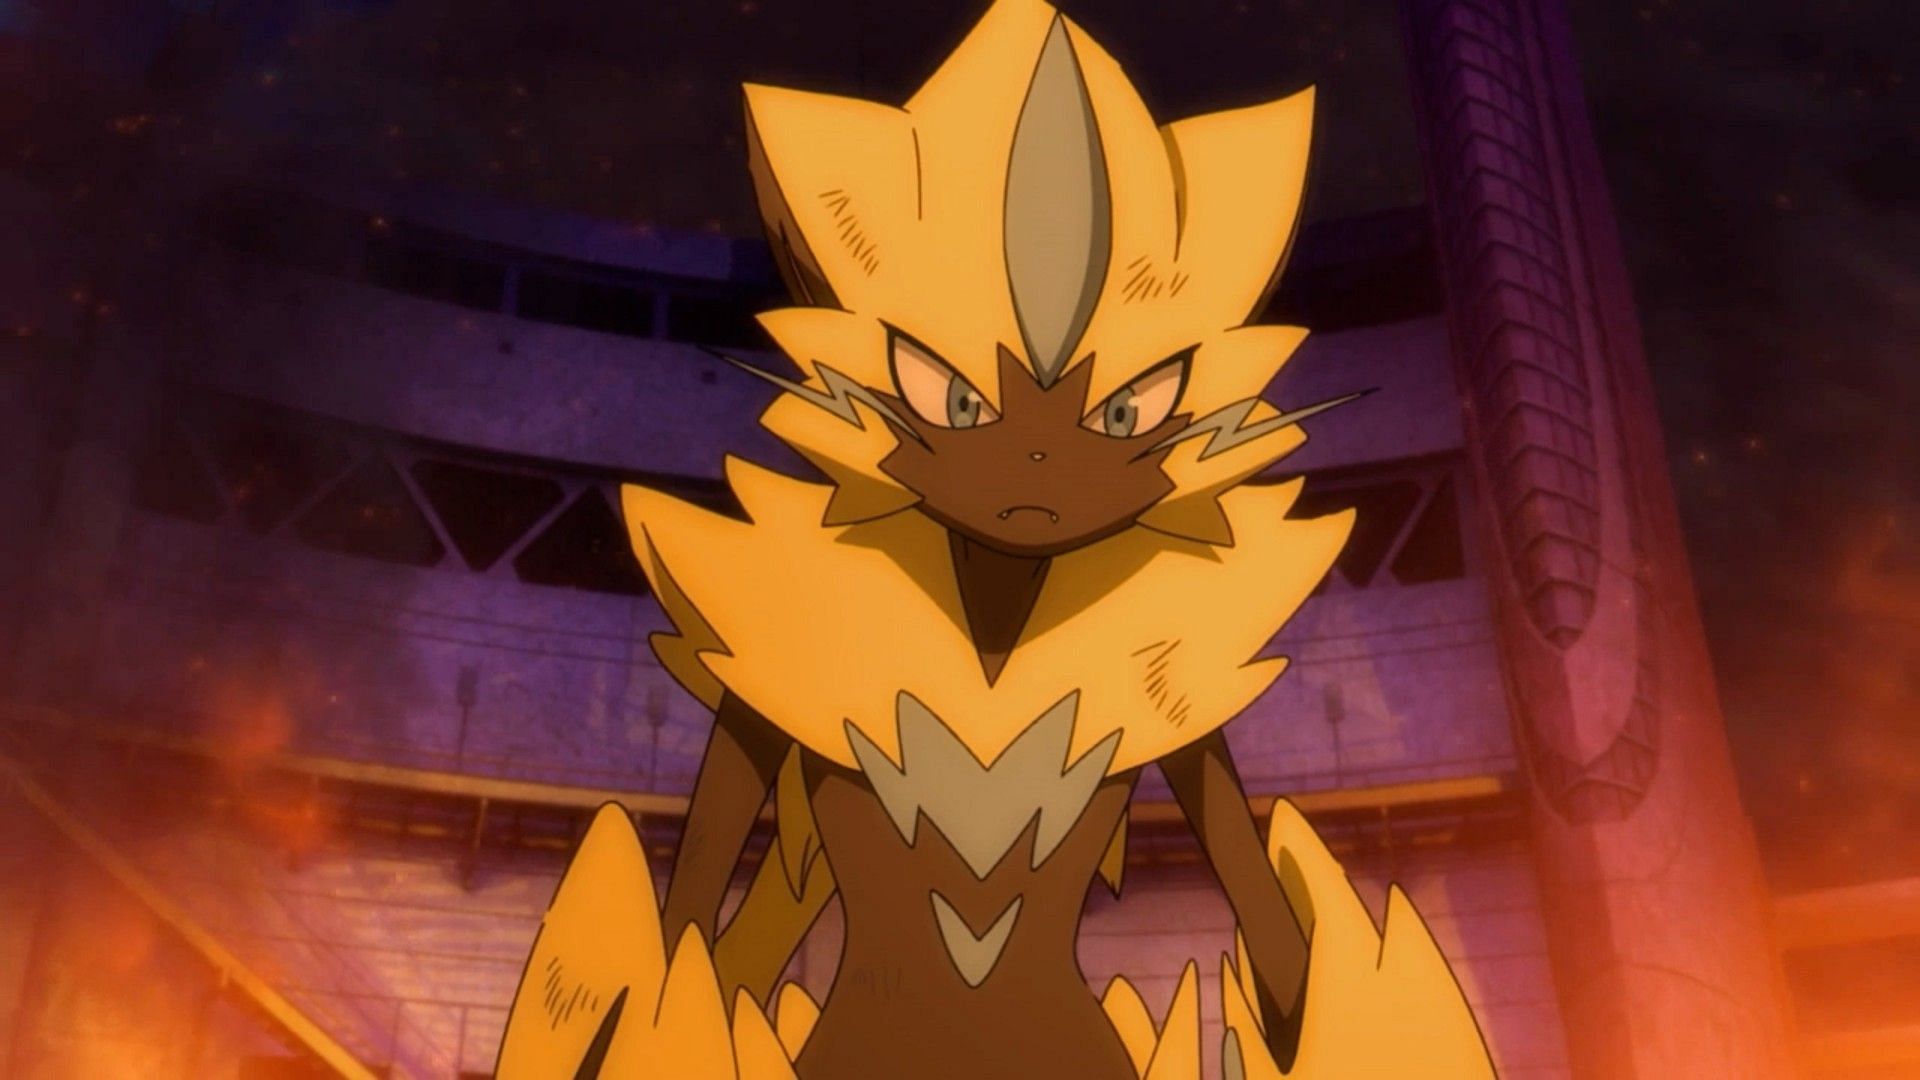 Zeraora in the Pokemon anime (Image via The Pokemon Company)